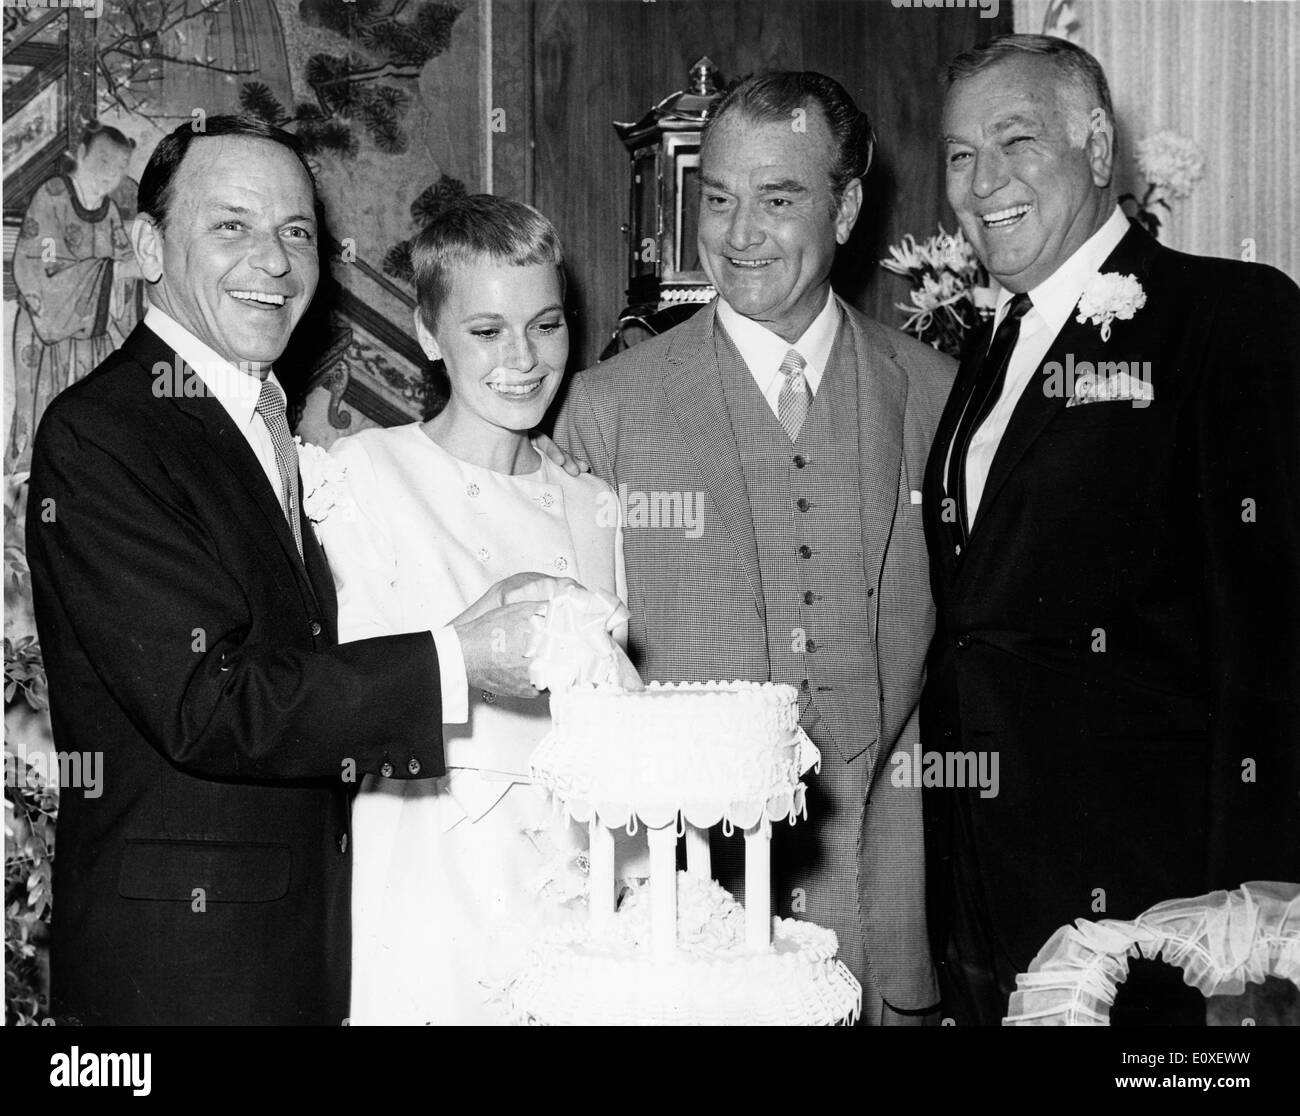 Frank Sinatra and Mia Farrow cutting the cake at their wedding Stock Photo